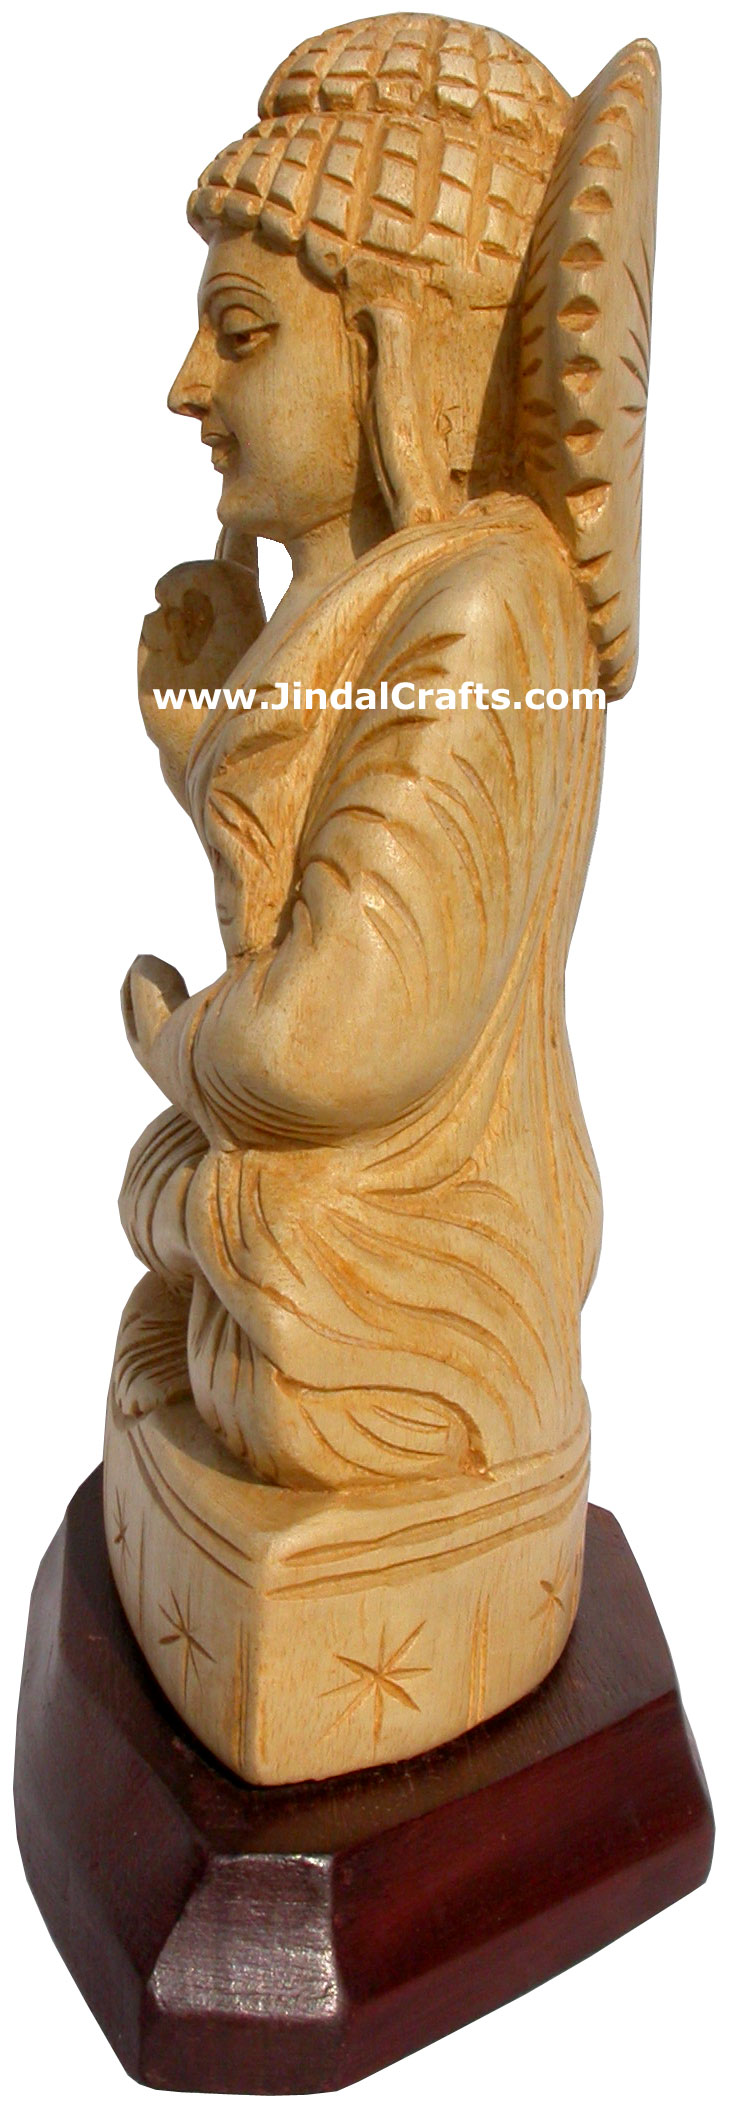 Lord Buddha Sculpture Hand Carved Wooden Idol Buddhism Handicrafts Crafts Arts